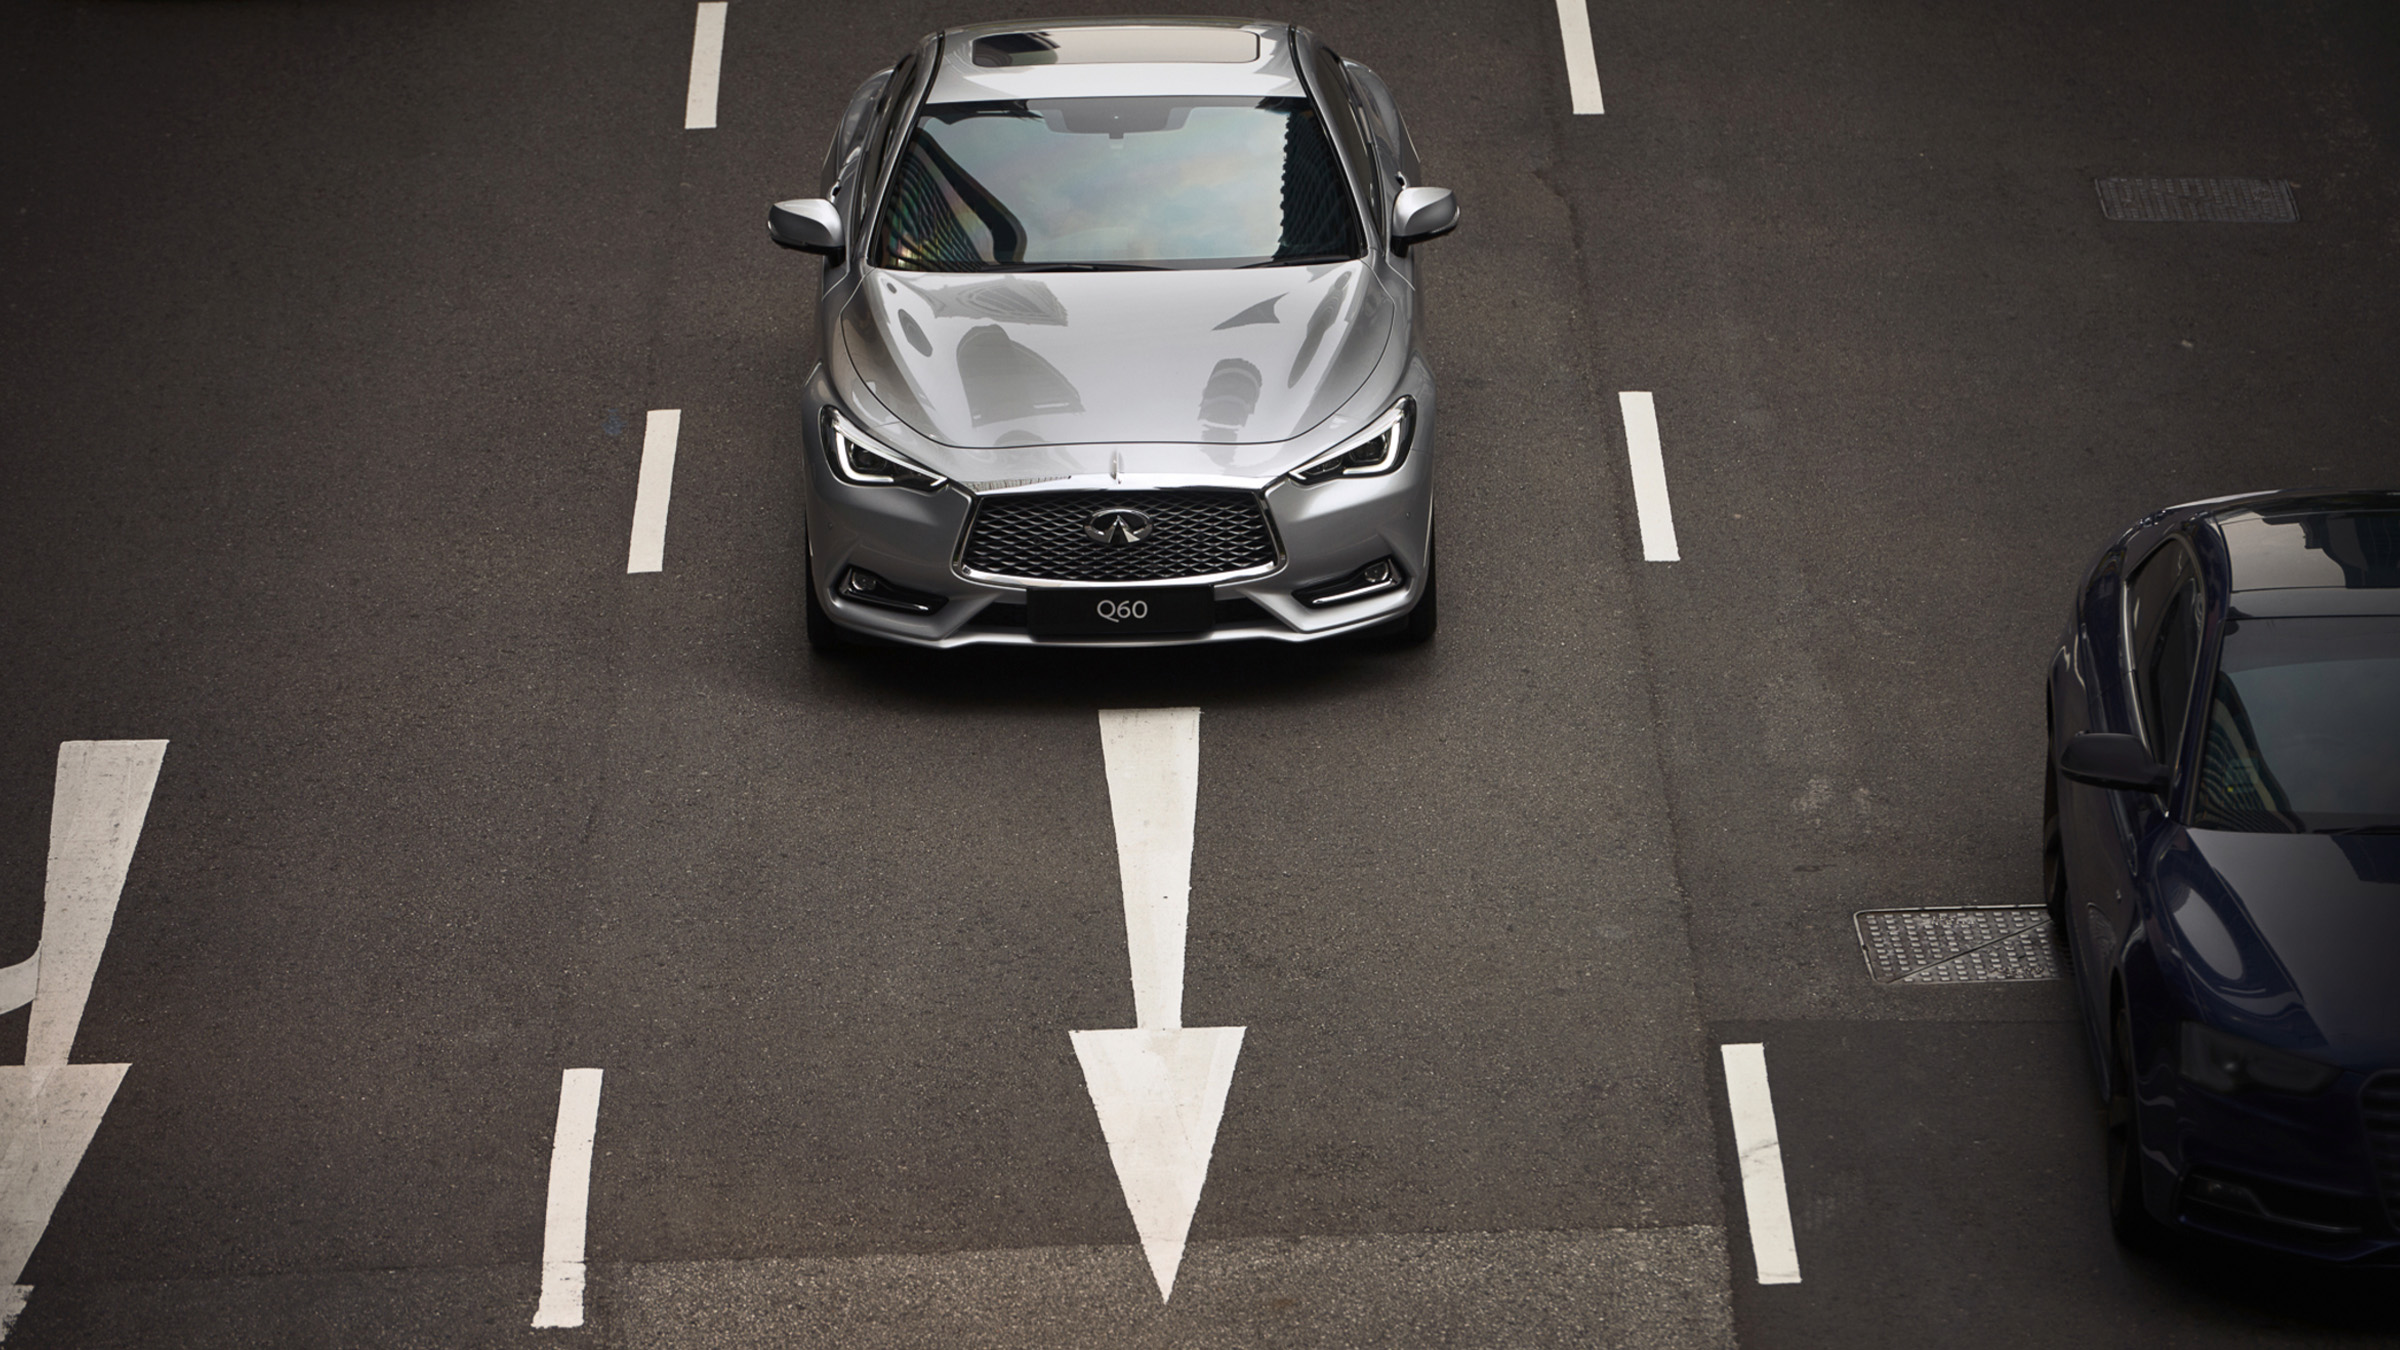 2022 INFINITI Q60 silver car driving in a lane.